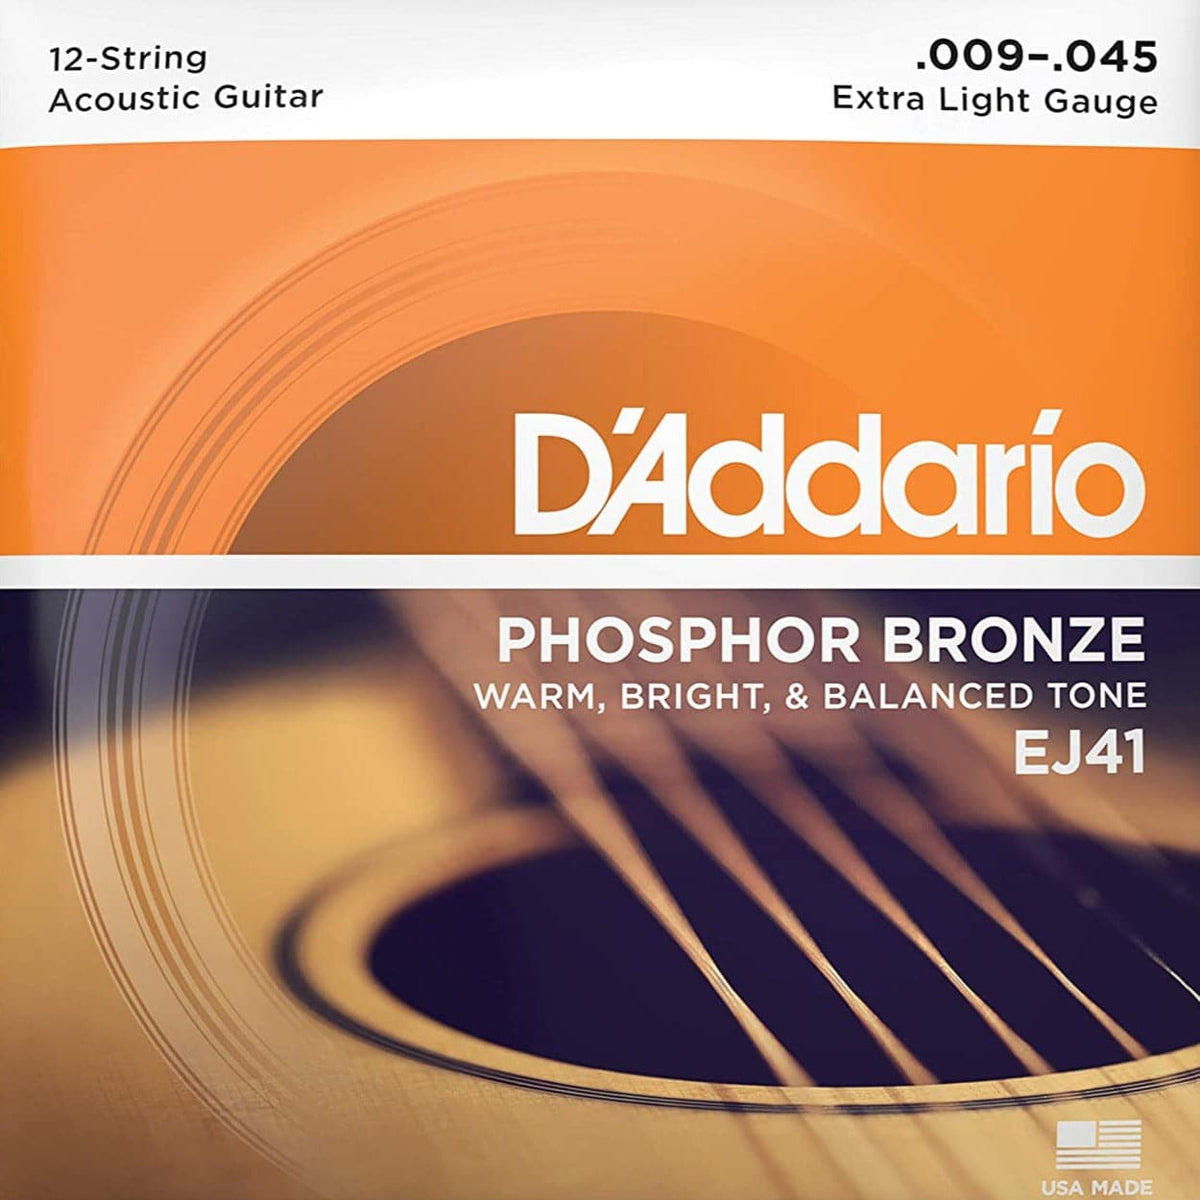 D'Addario EJ41 12-String Phosphor Bronze Acoustic Guitar Strings - Extra Light - 9-45